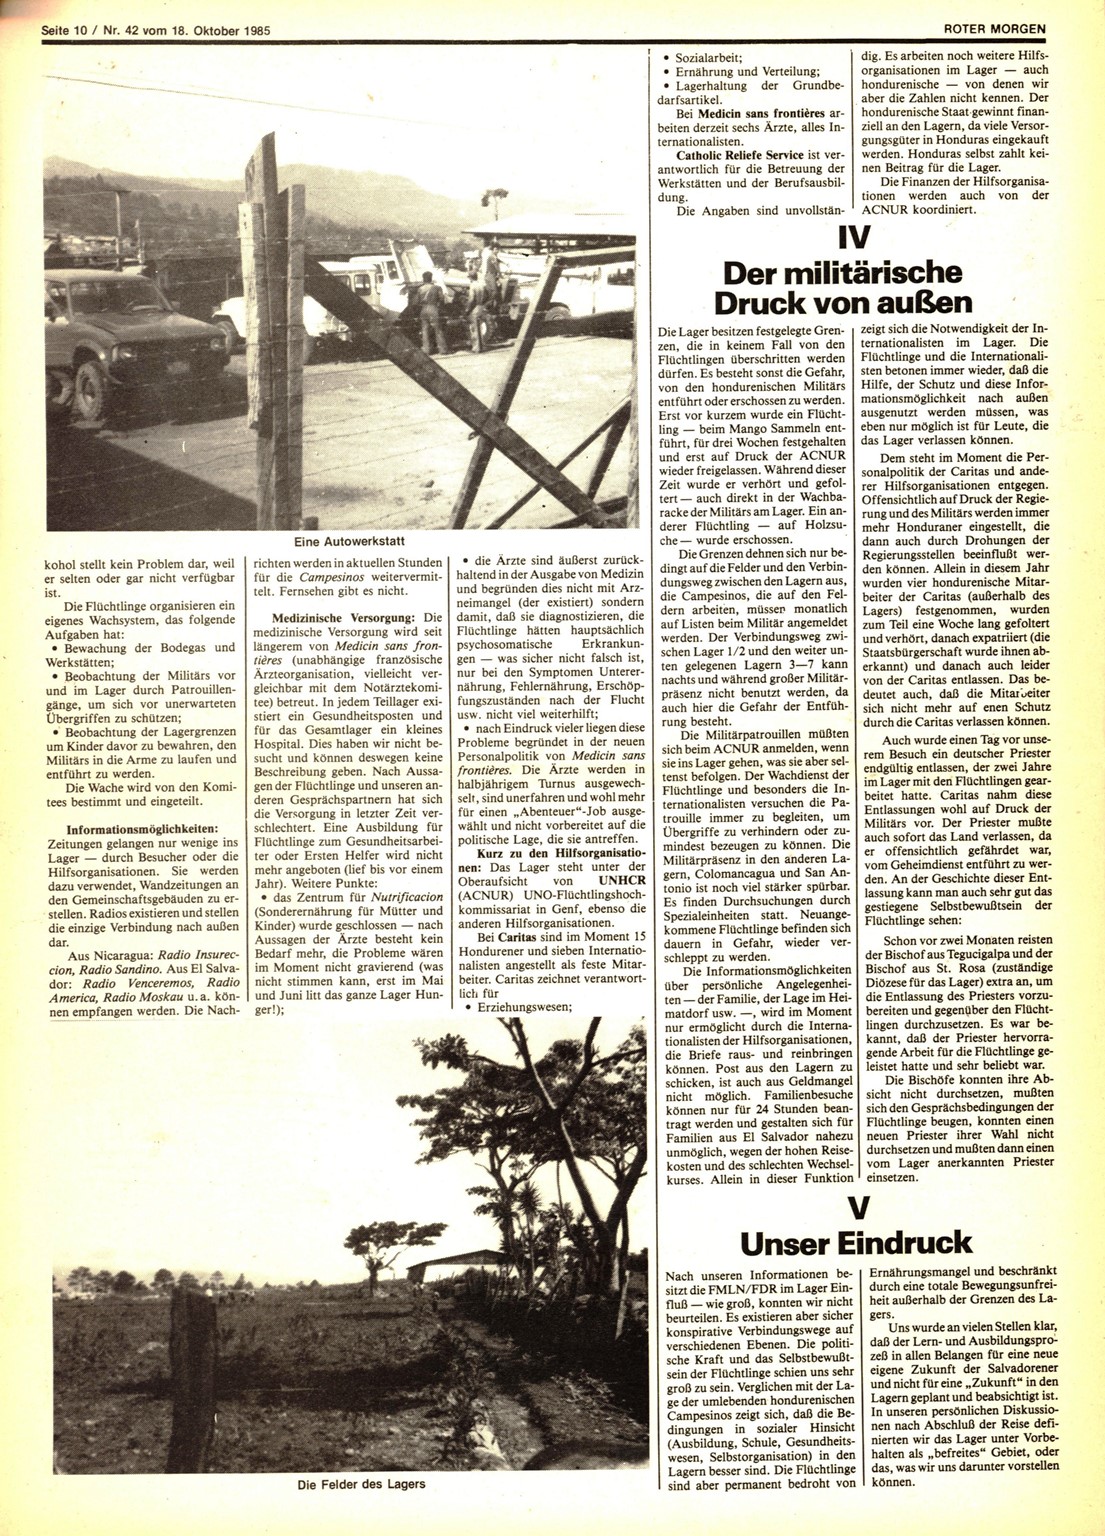 Roter Morgen, 19. Jg., 18. Oktober 1985, Nr. 42, Seite 10